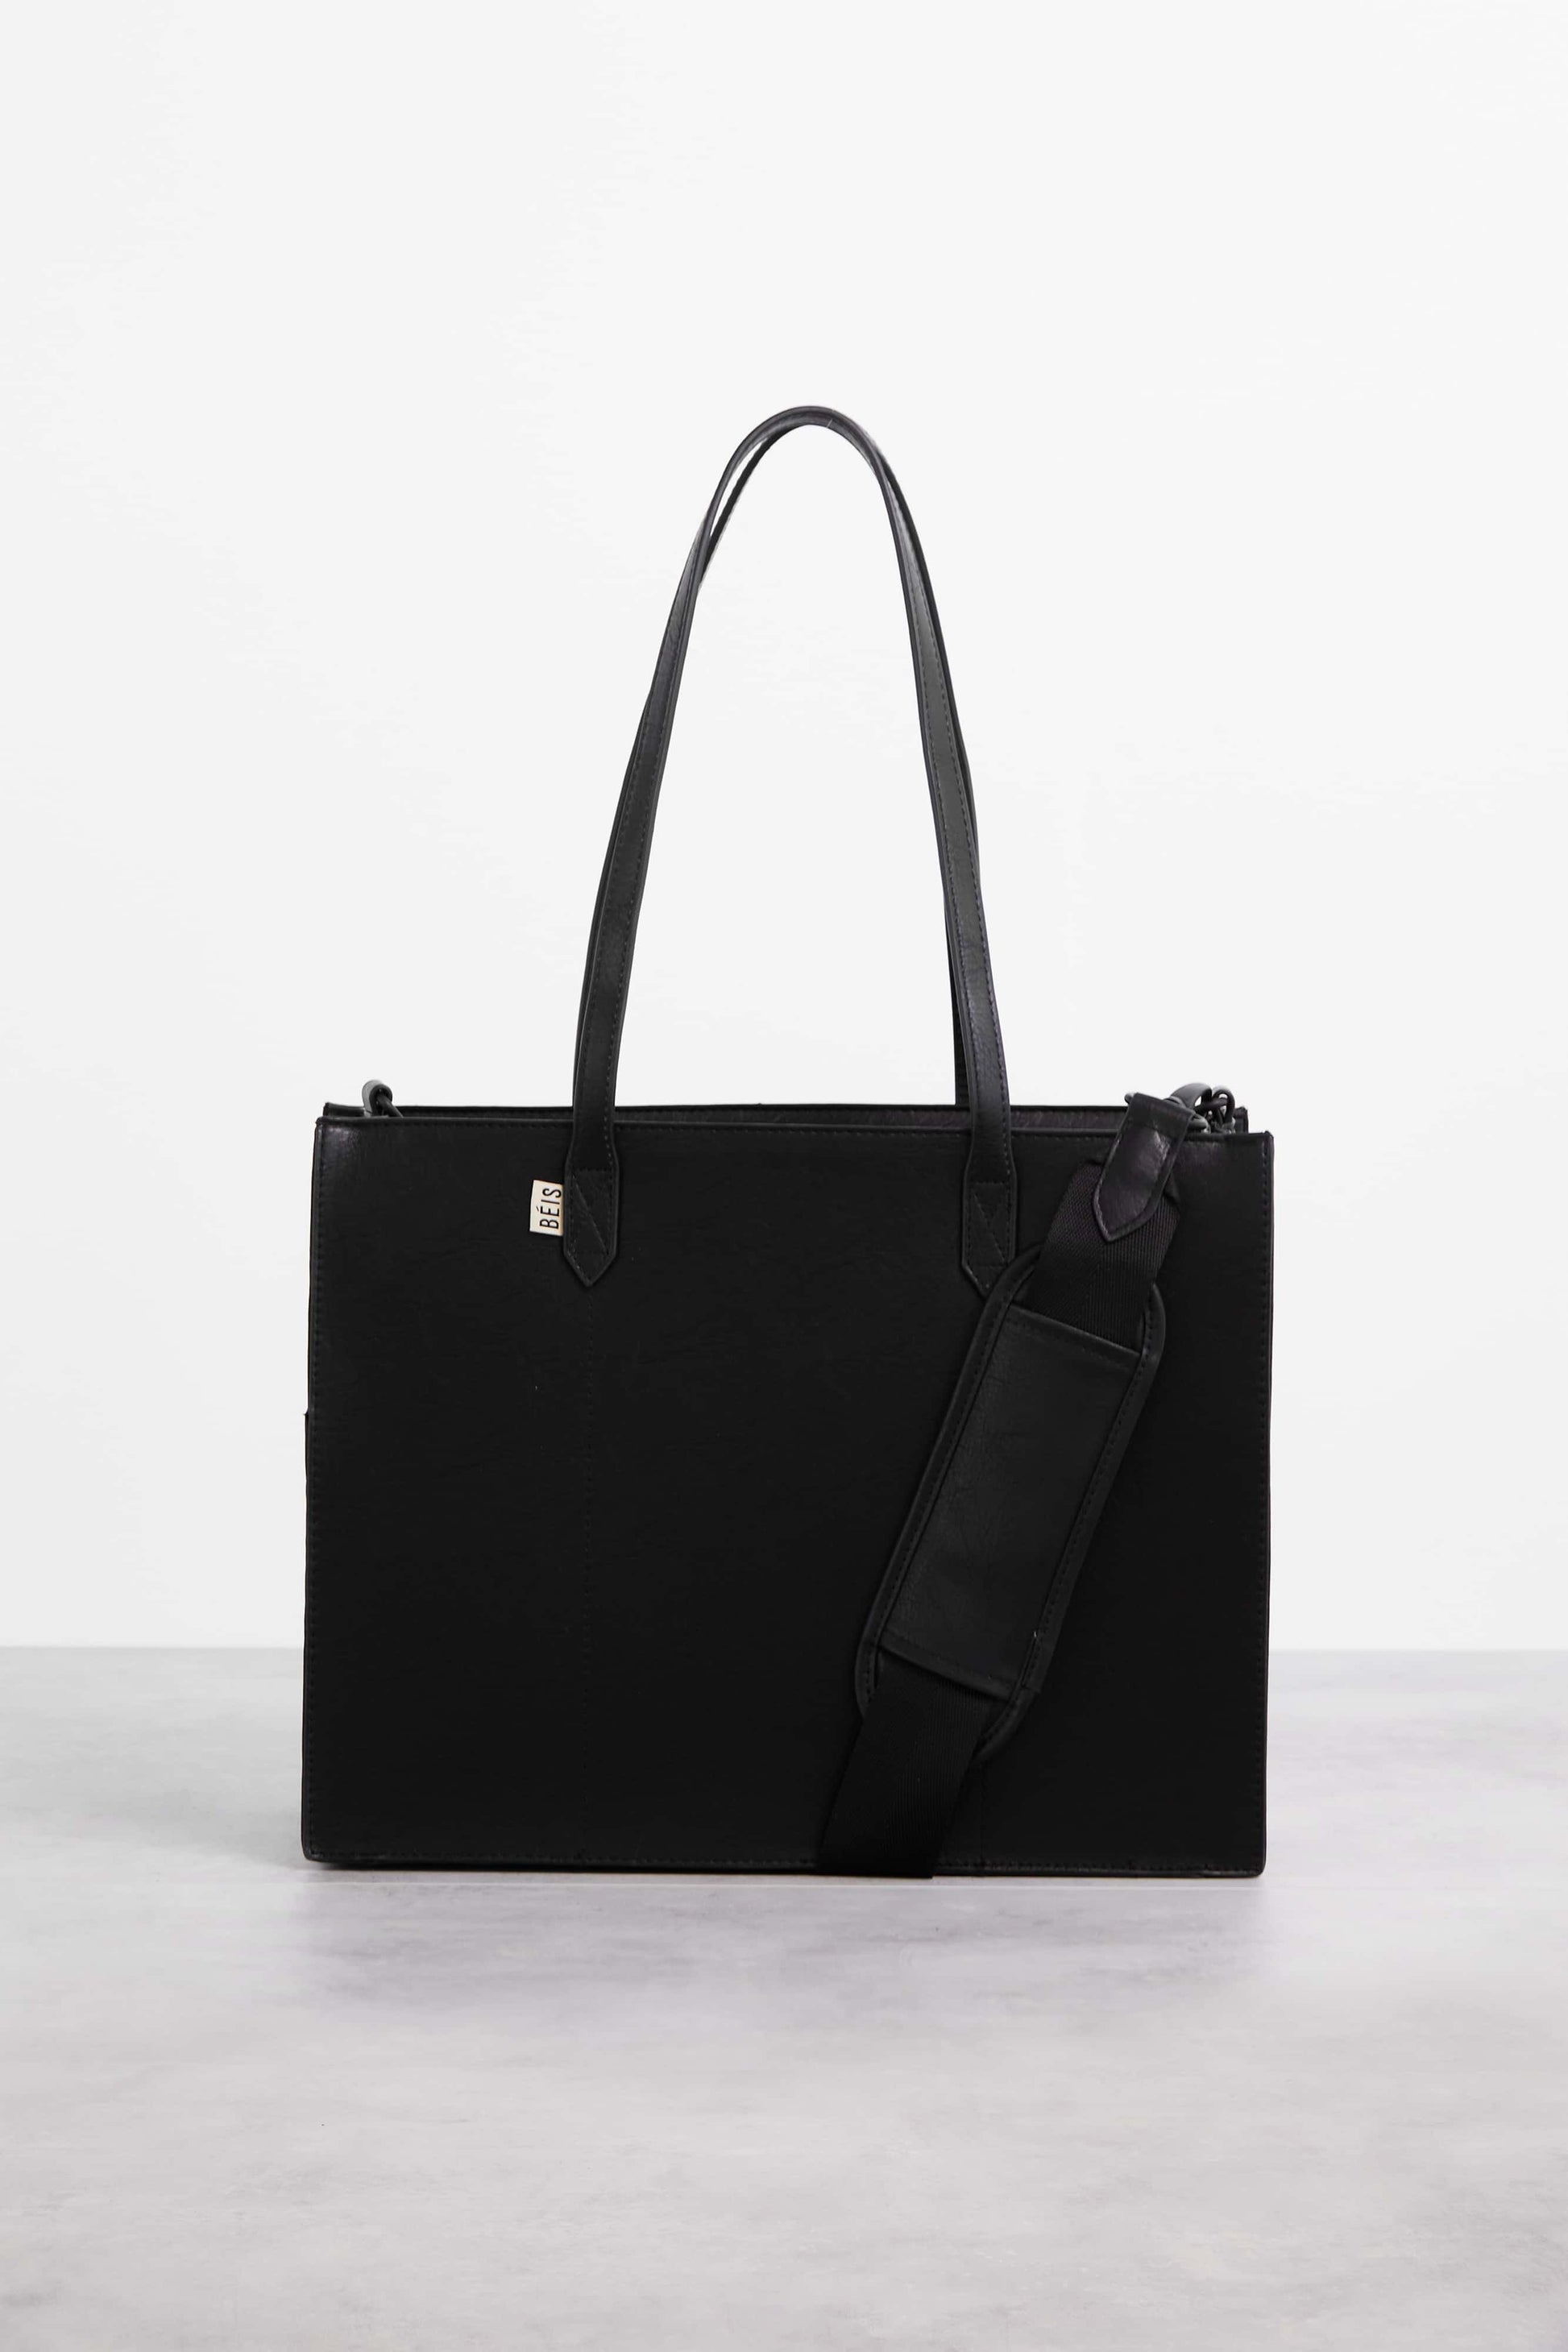 leather black handbag